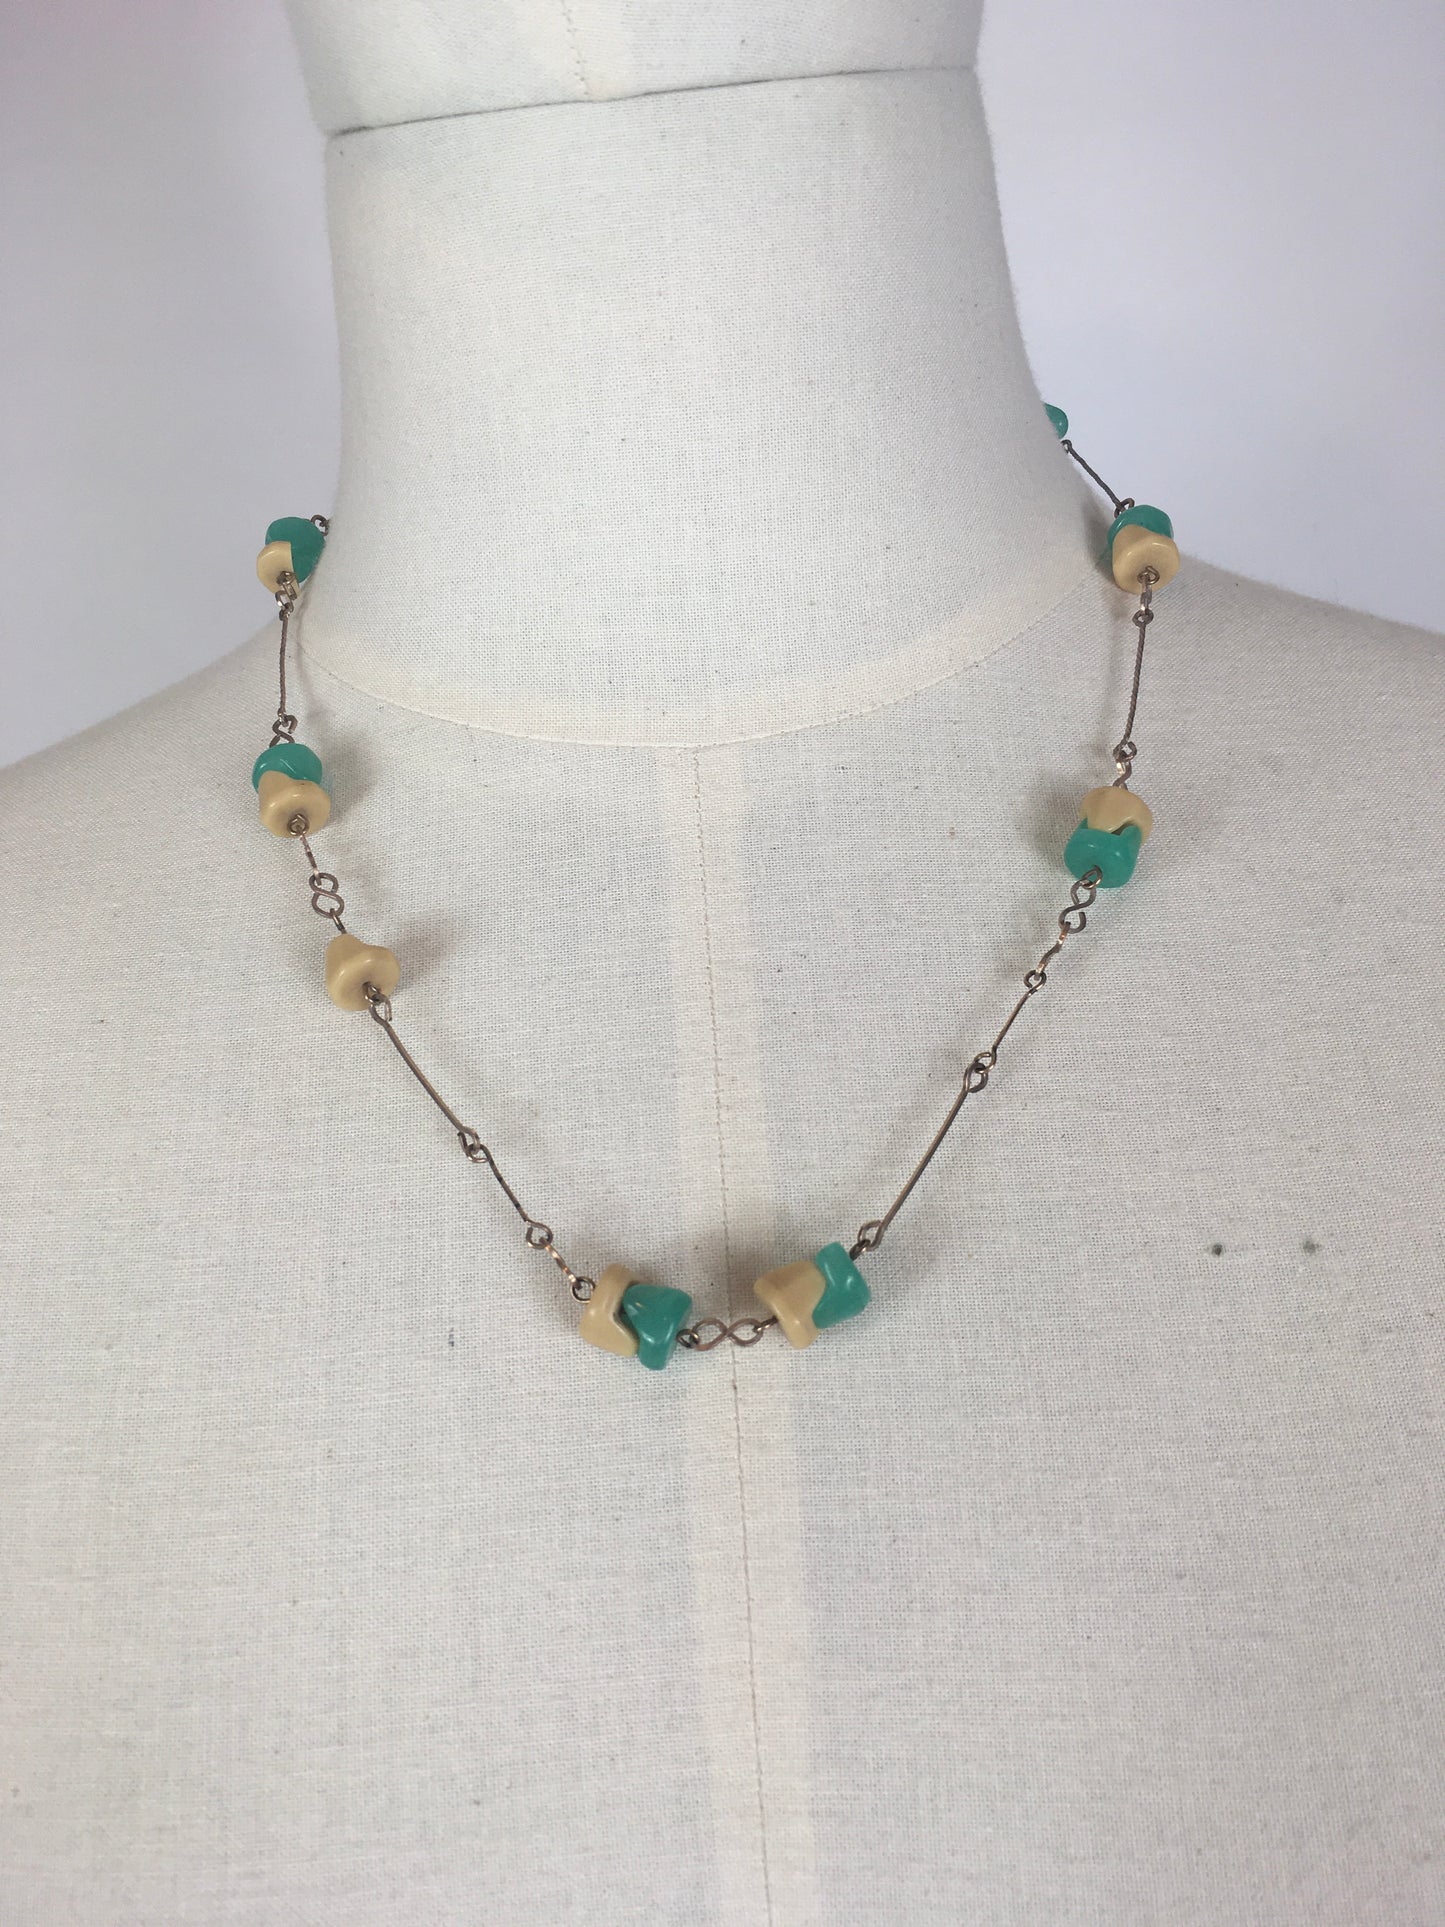 Original 1930’s Deco Necklace - In Turquoise Blue, Cream & Silver